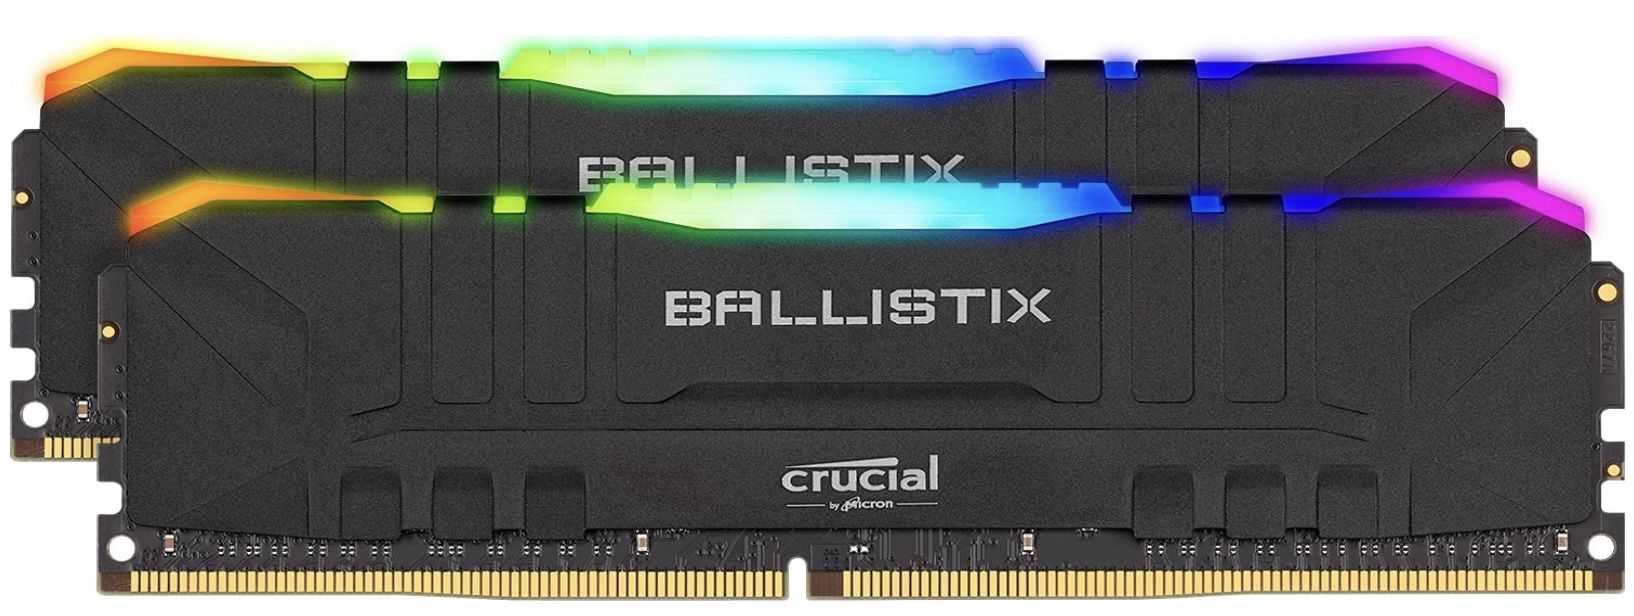 Crucial Ballistix RGB 32GB Kit DDR4 3600 CL16 für 159,90€ (statt 170€)